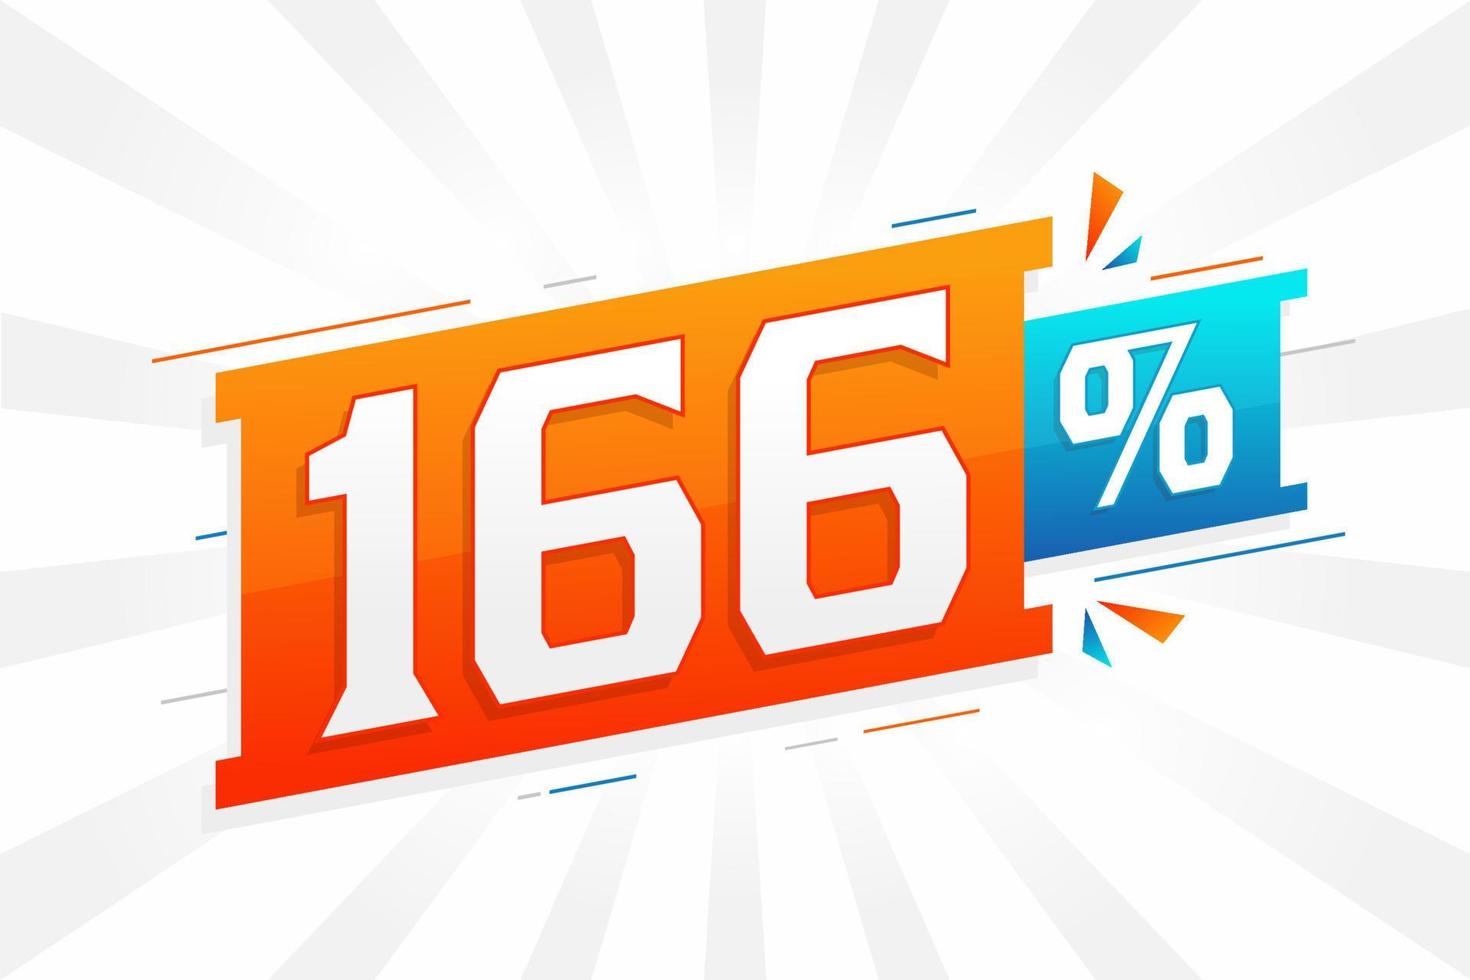 166 discount marketing banner promotion. 166 percent sales promotional design. vector